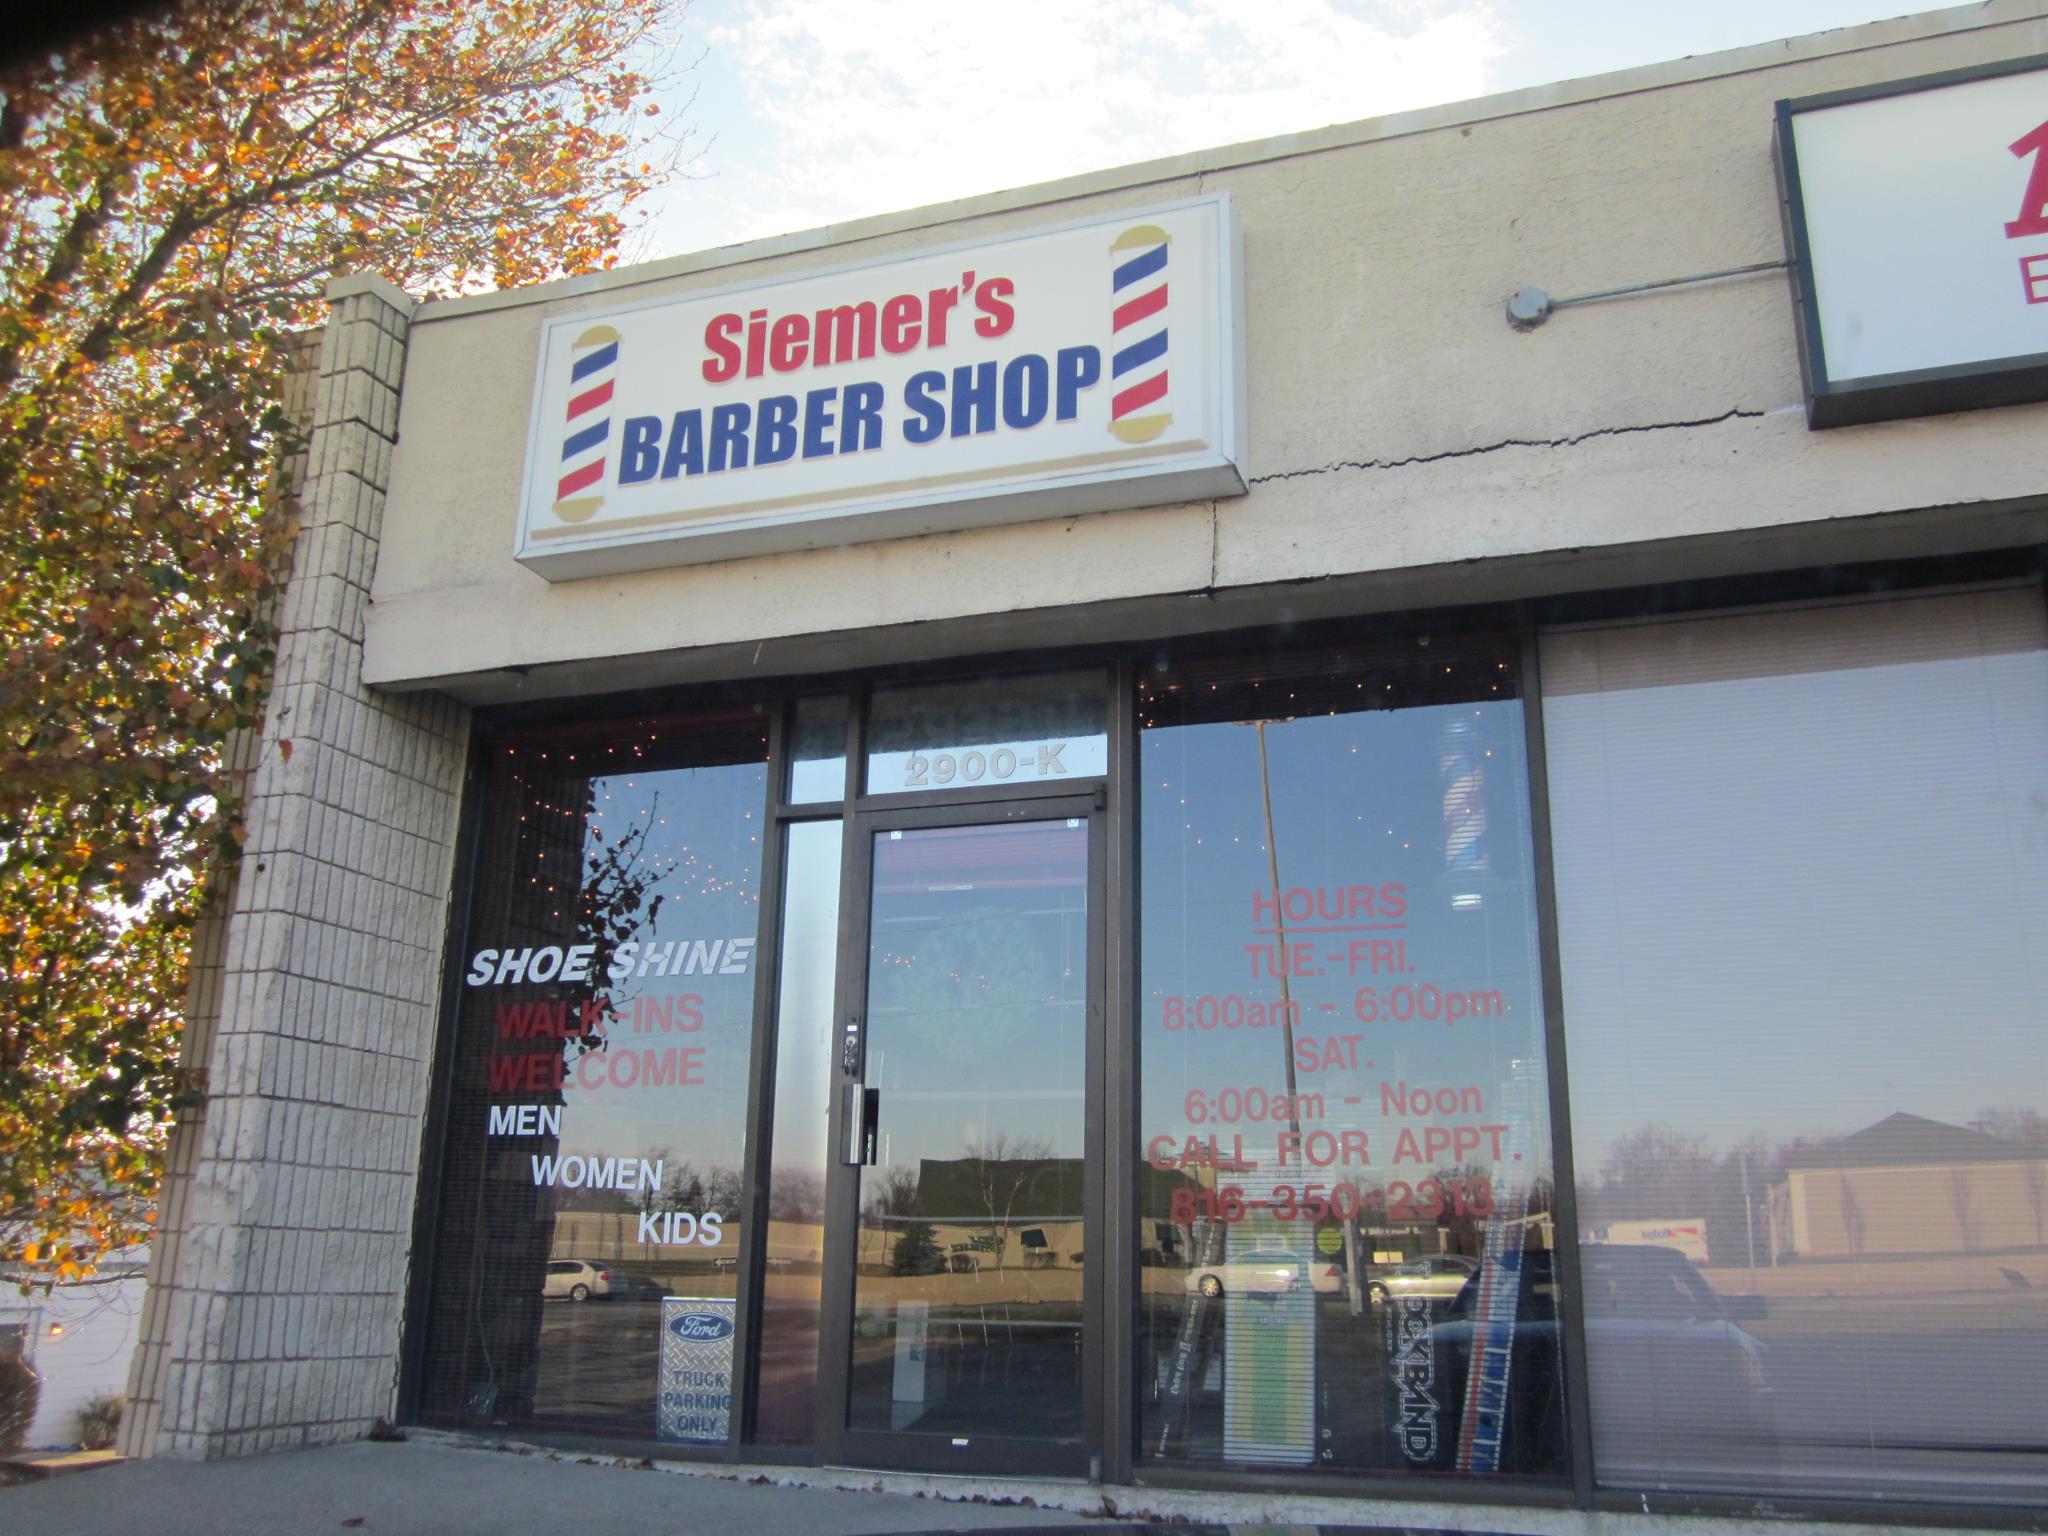 Siemers Barber Shop 917 Washington St, Chillicothe Missouri 64601